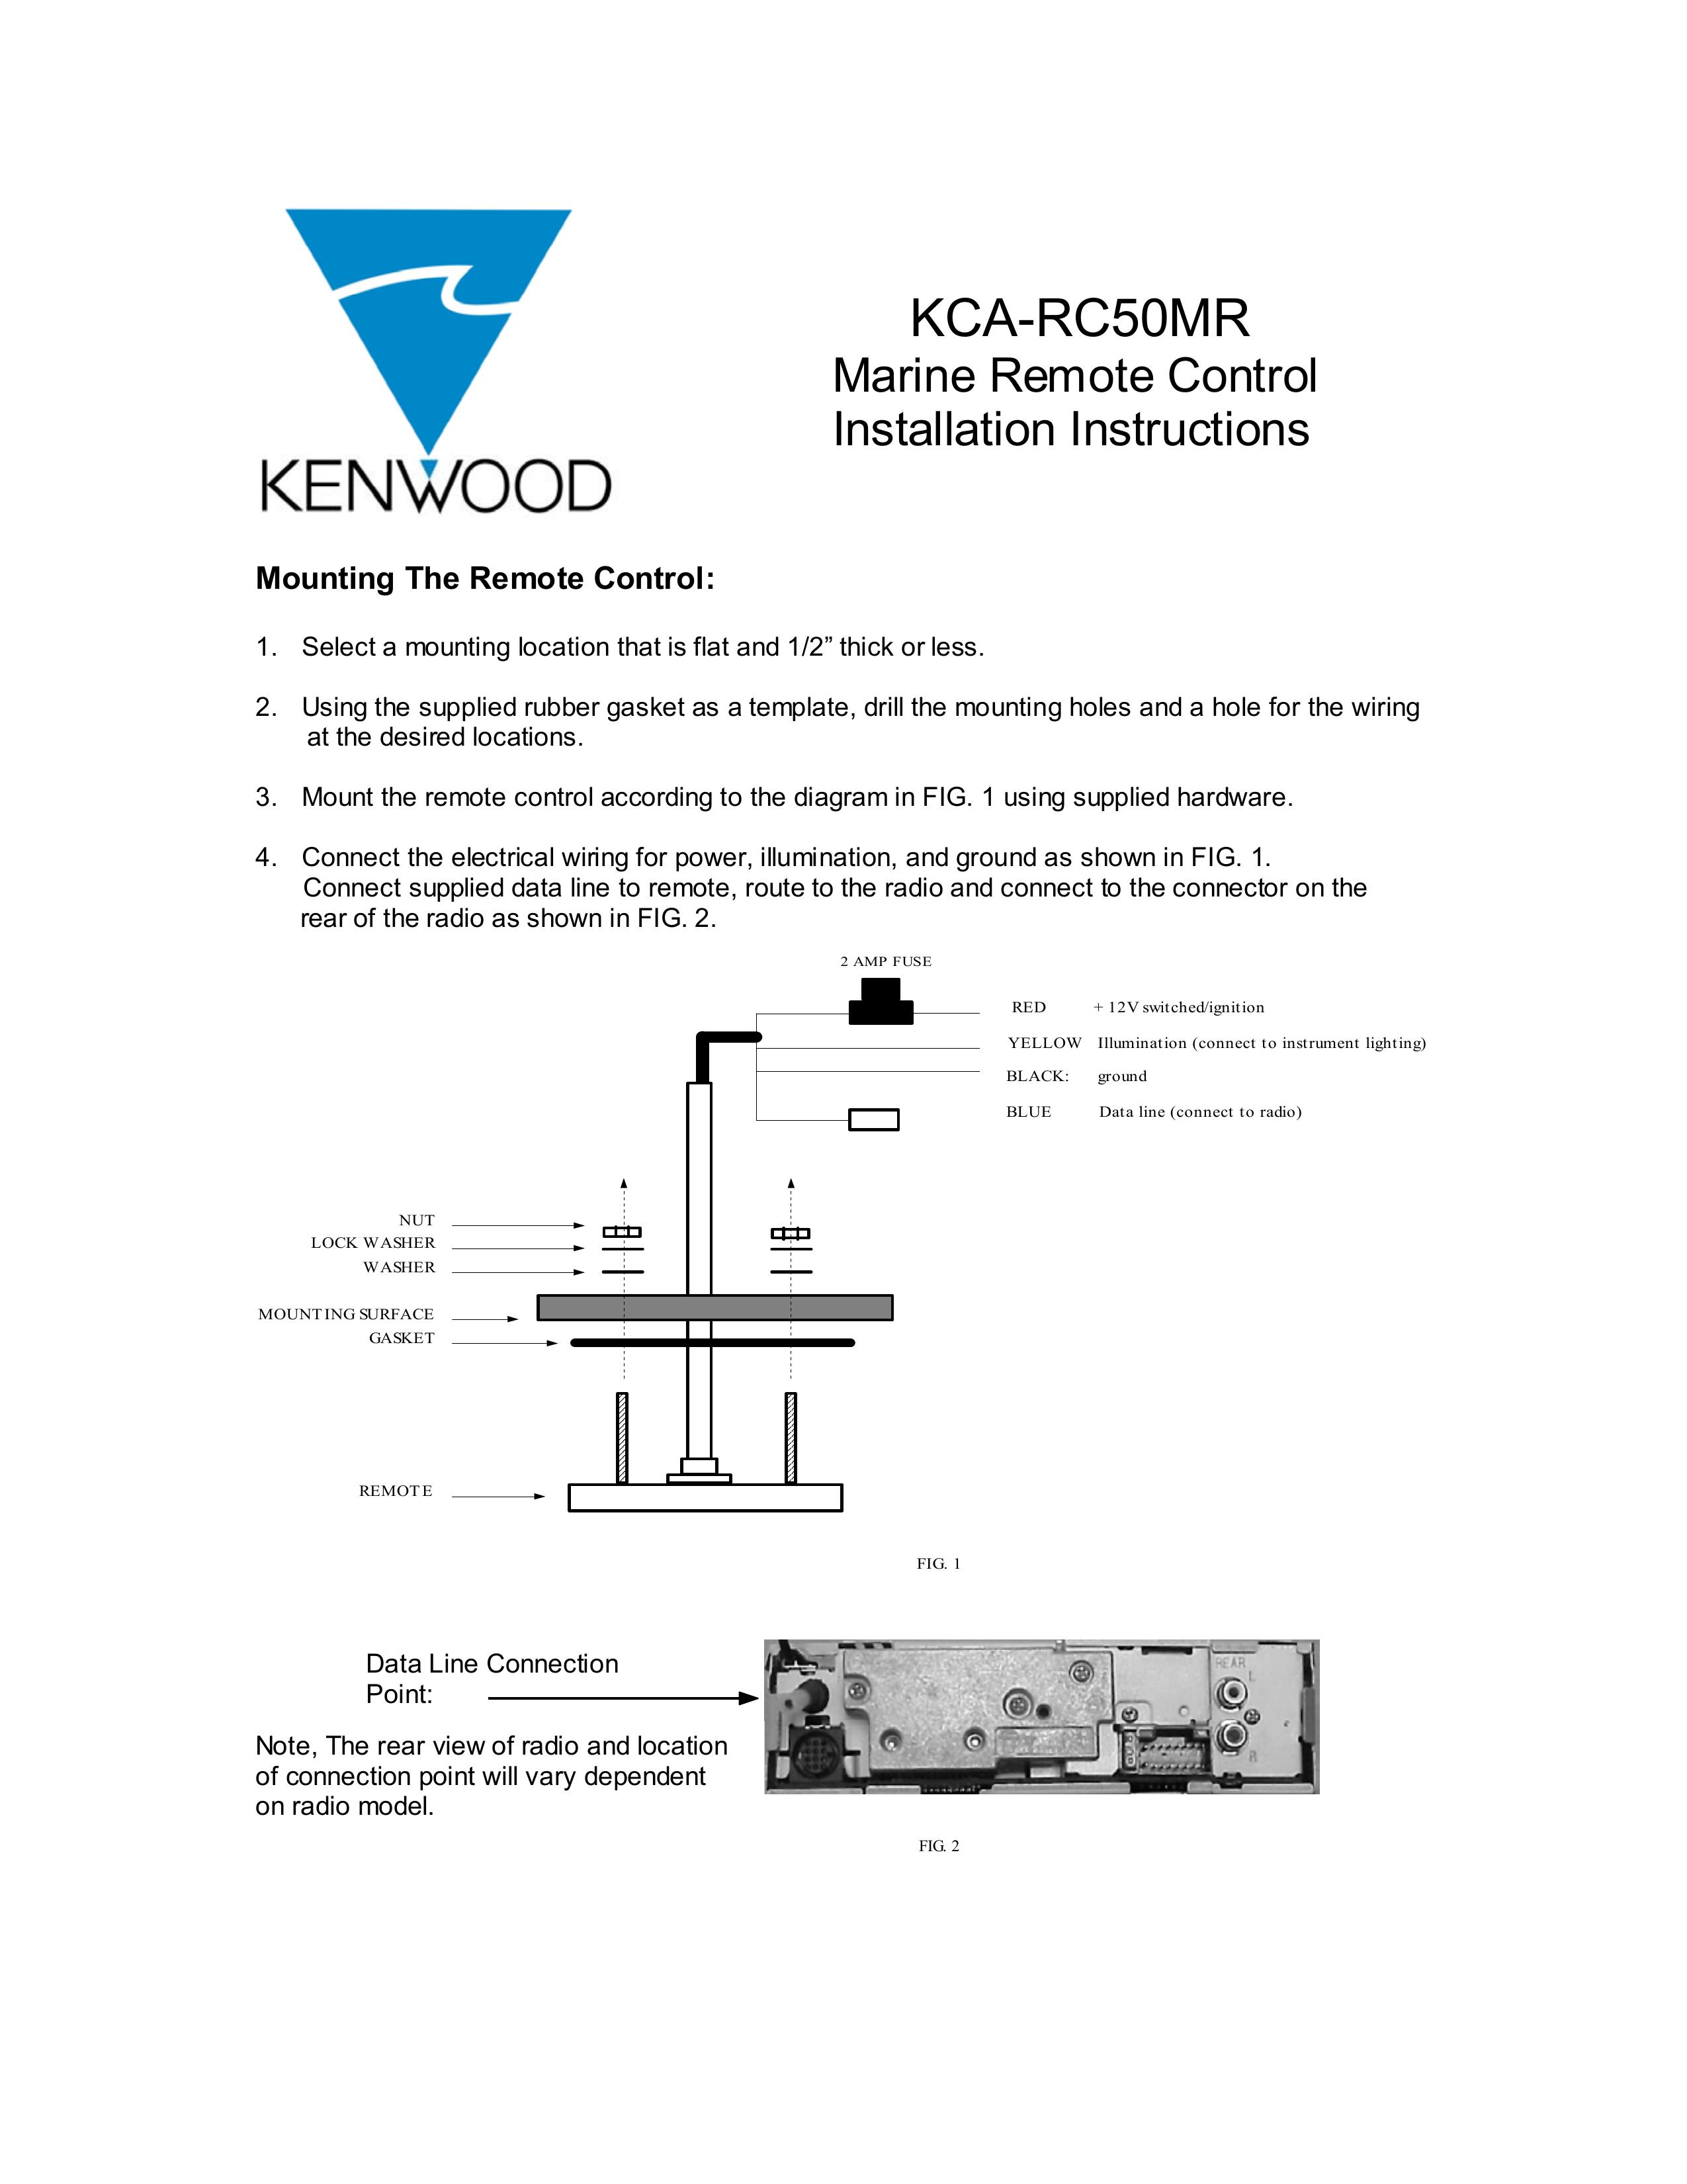 Kenwood KCA-RC50MR Marine Radio User Manual